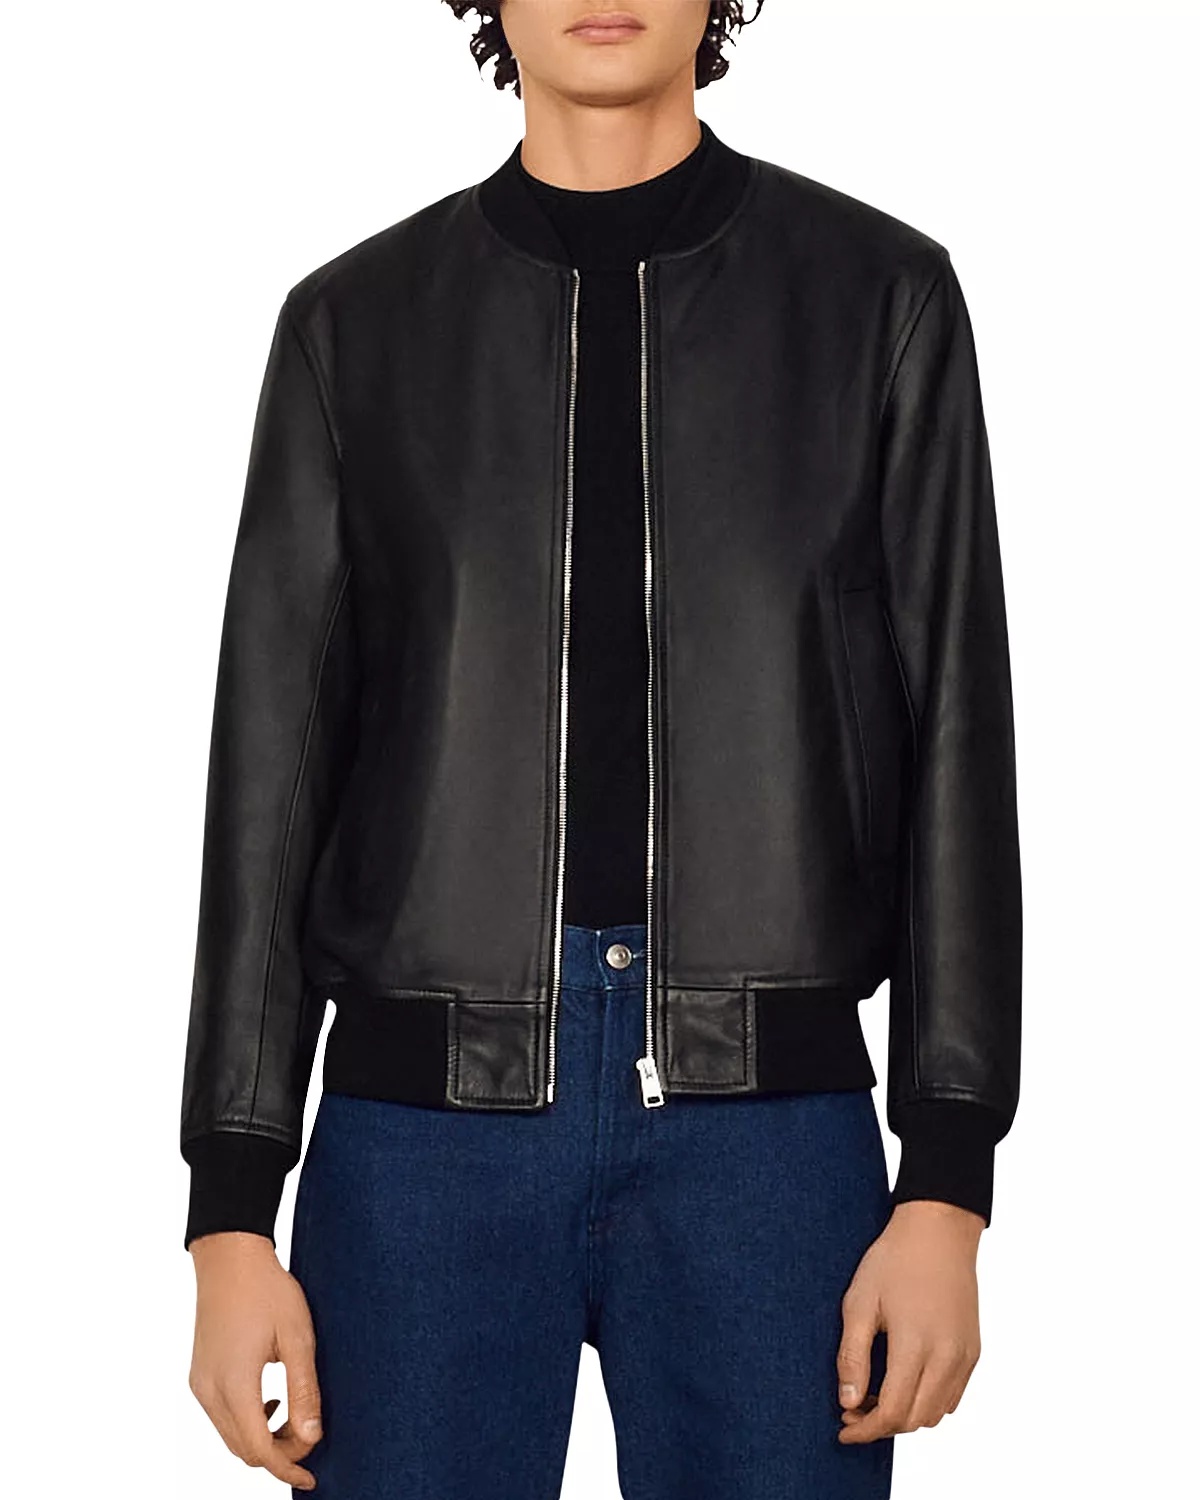 New Monaco Leather Jacket - 1